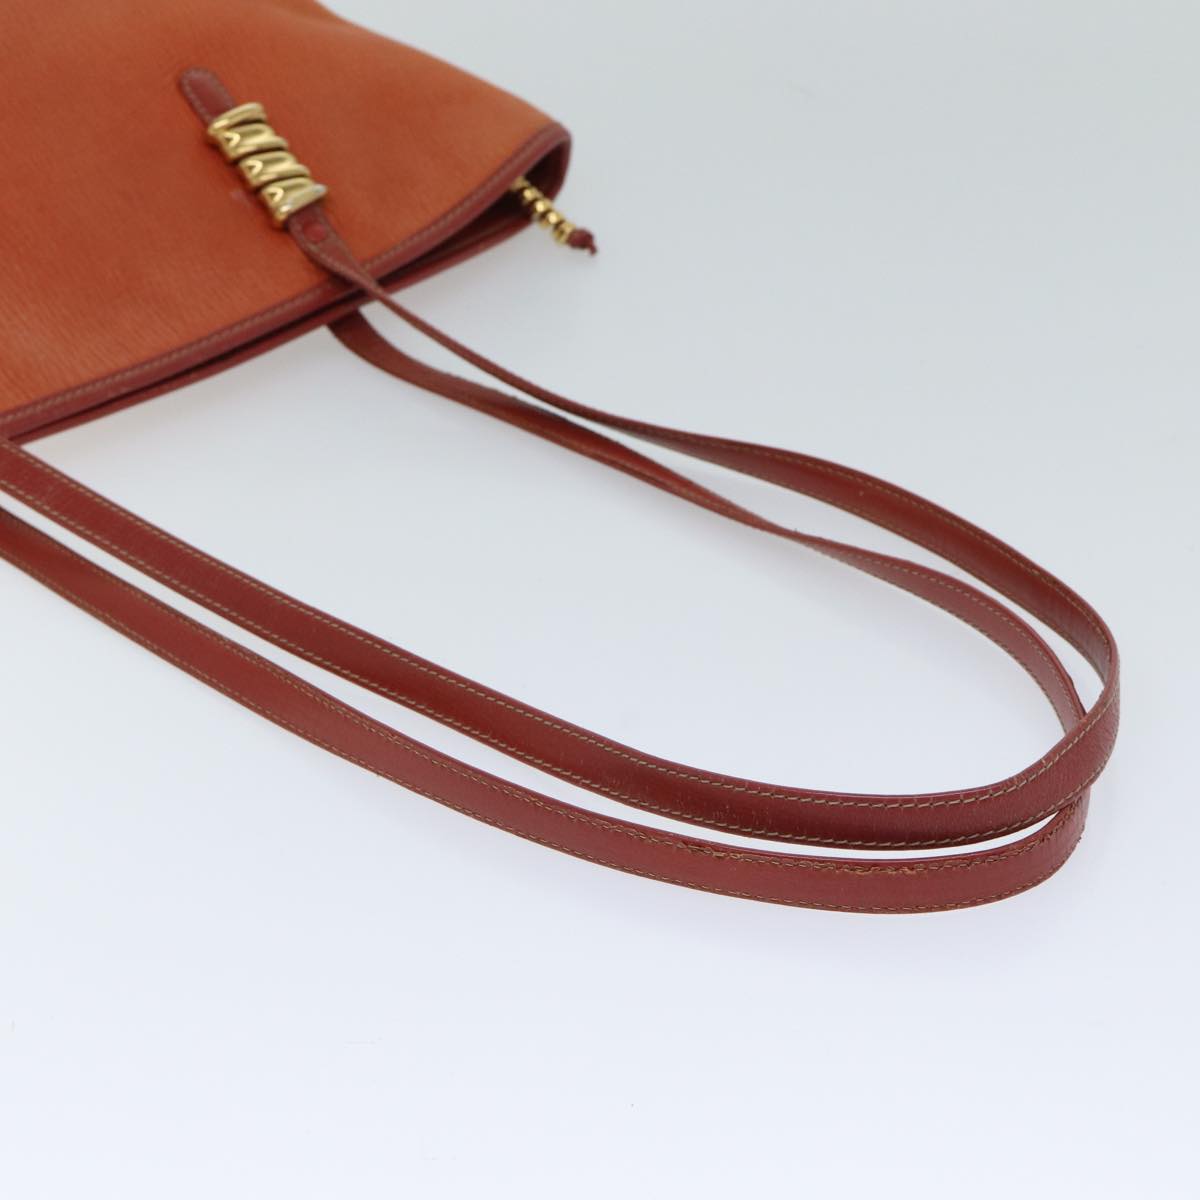 LOEWE Tote Bag Leather Orange Auth 71557